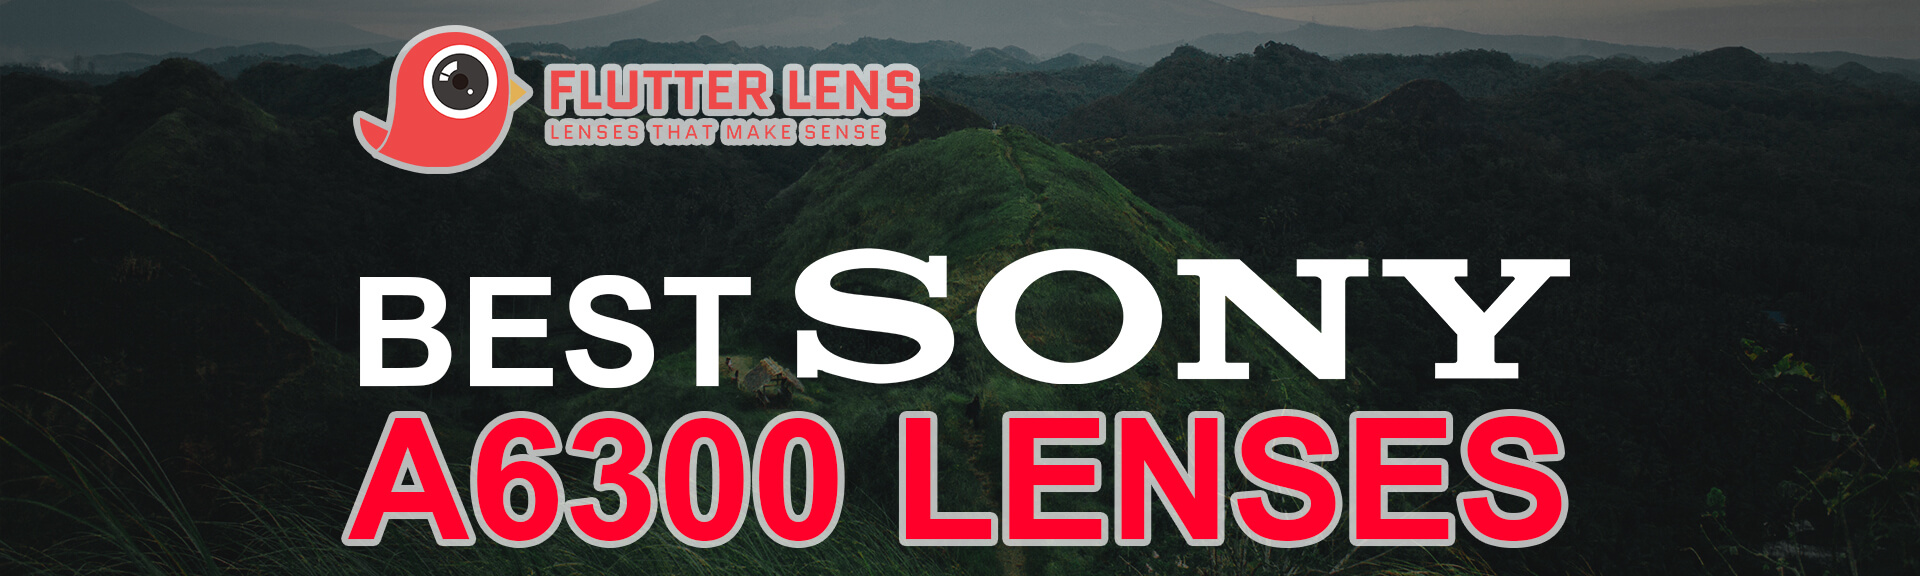 Best Sony A6300 Lenses